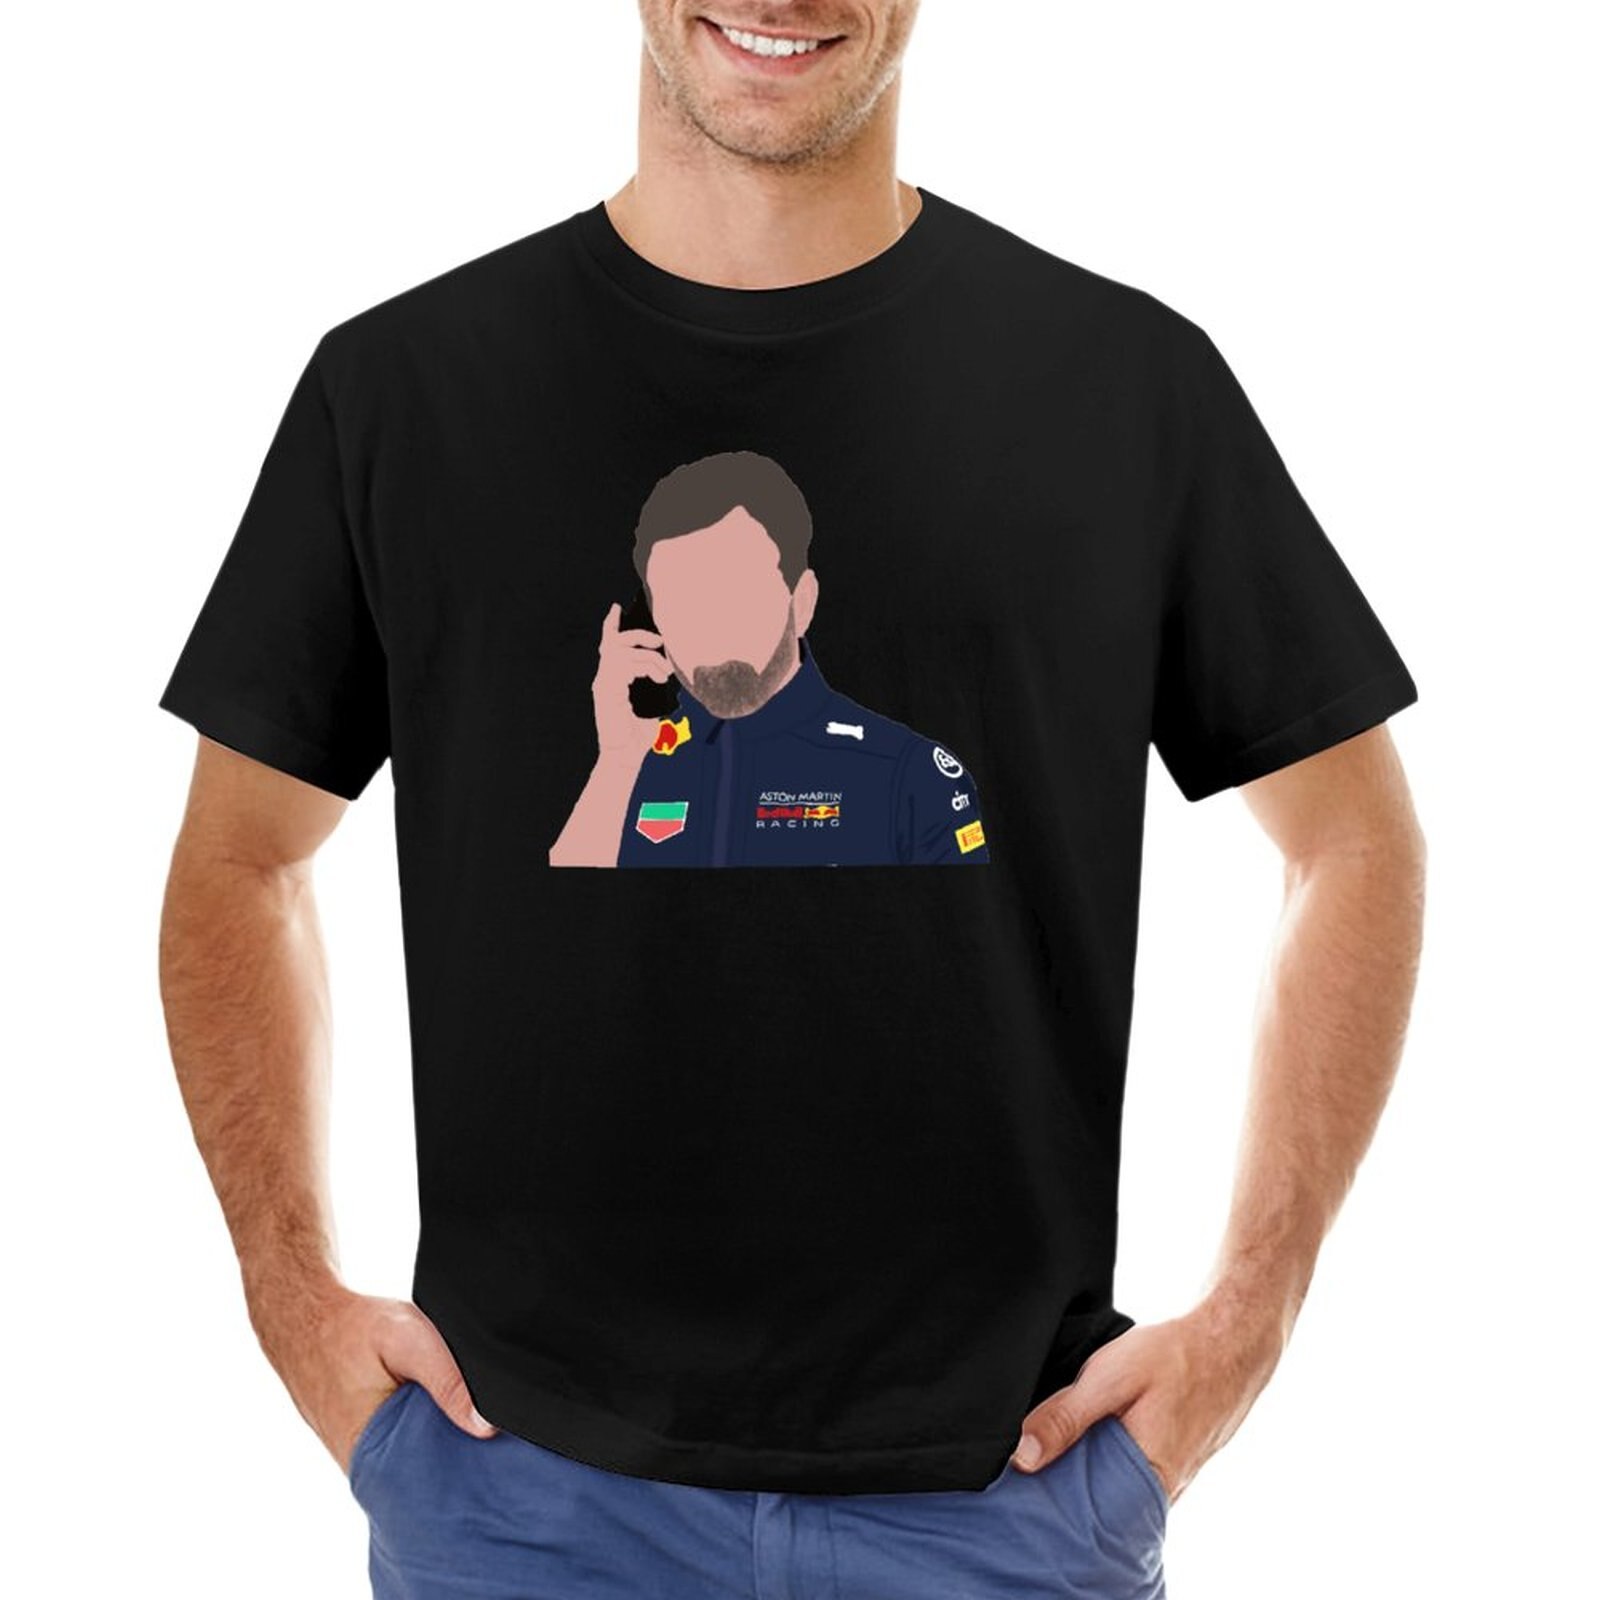 Christian Horner 남성용 짧은 티셔츠, 슬림 핏 티셔츠, 귀여운 옷, 블랙